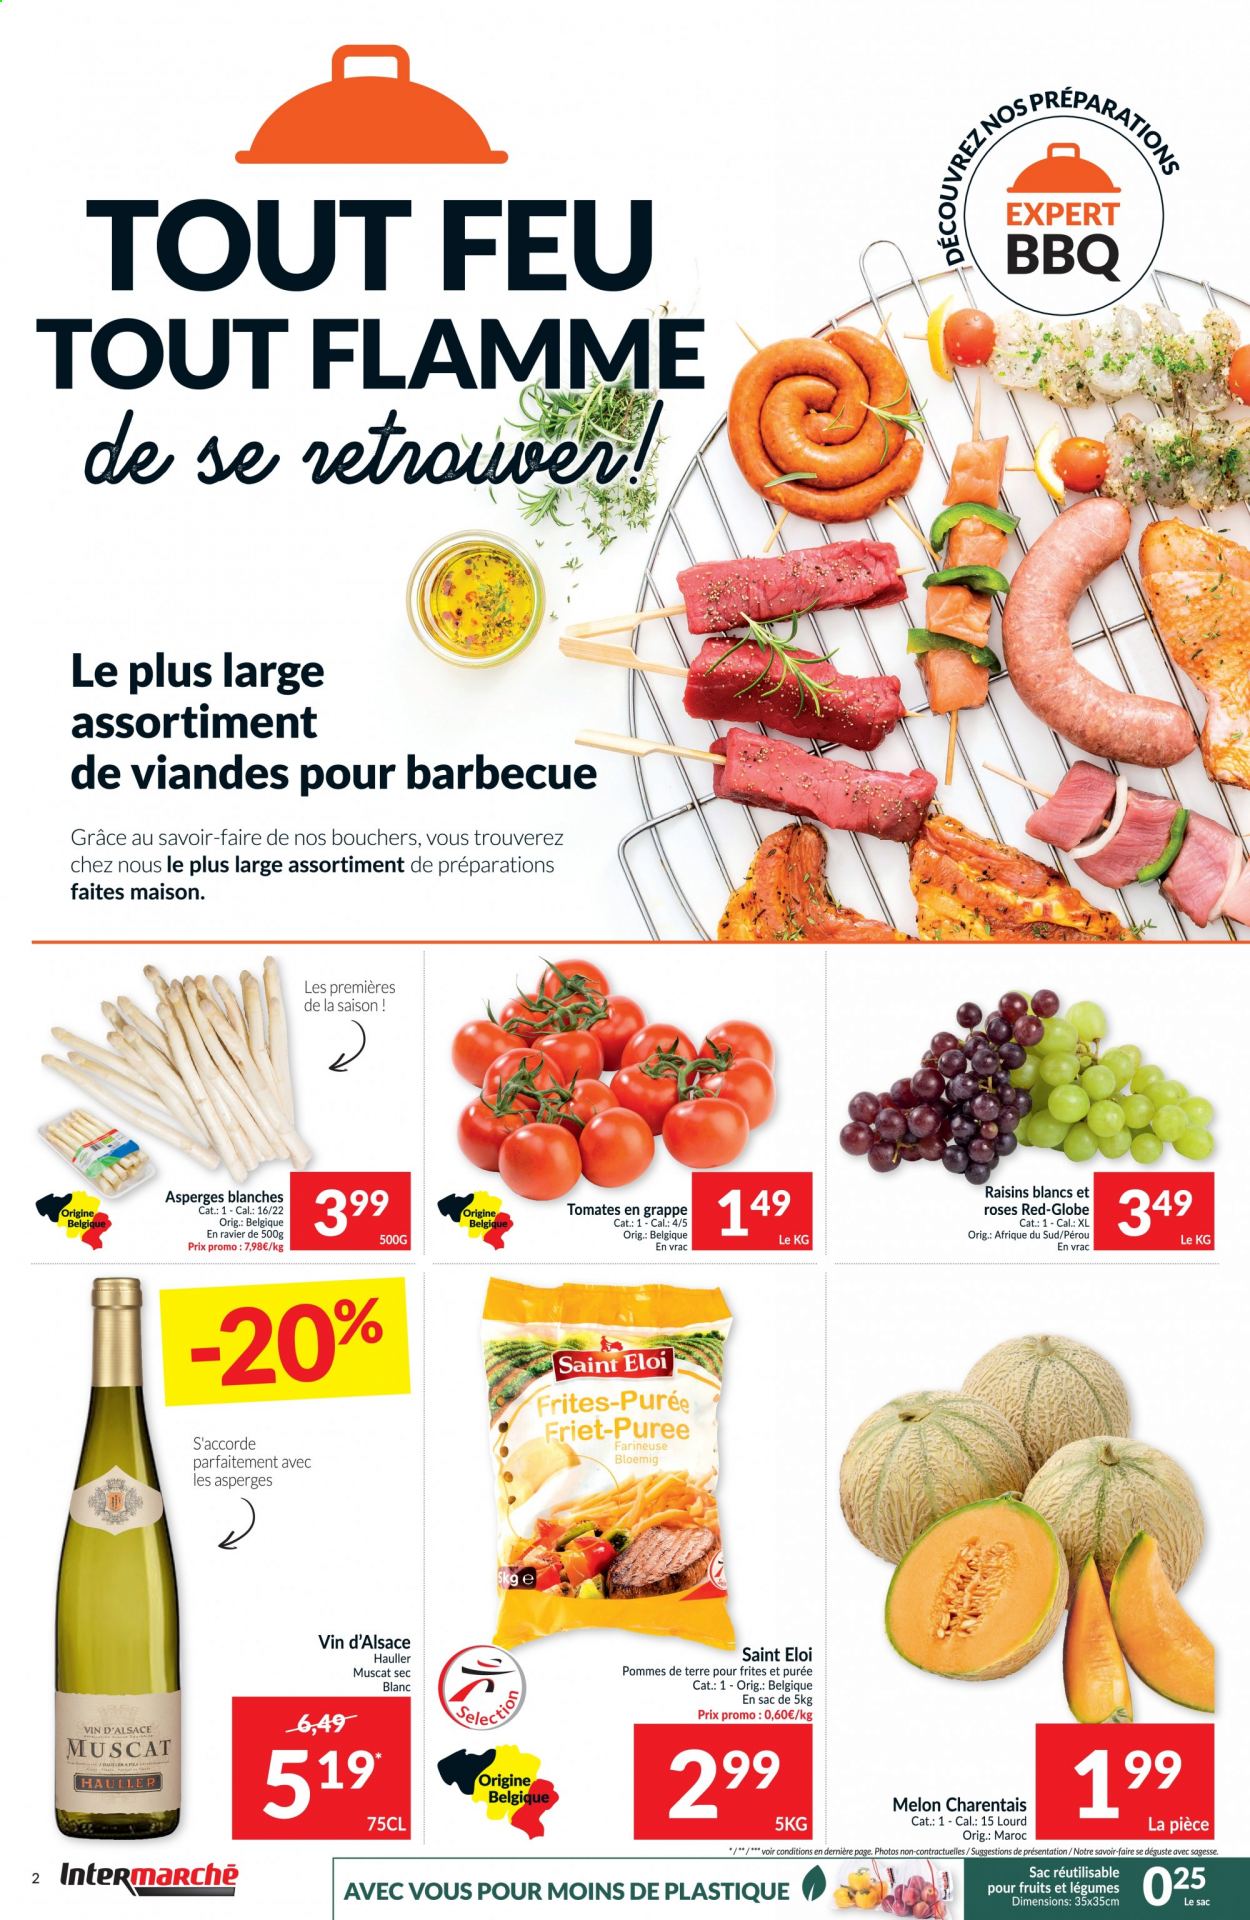 thumbnail - Intermarché-aanbieding - 20/04/2021 - 25/04/2021 -  producten in de aanbieding - asperges, frites, Vin d’Alsace, BBQ. Pagina 2.